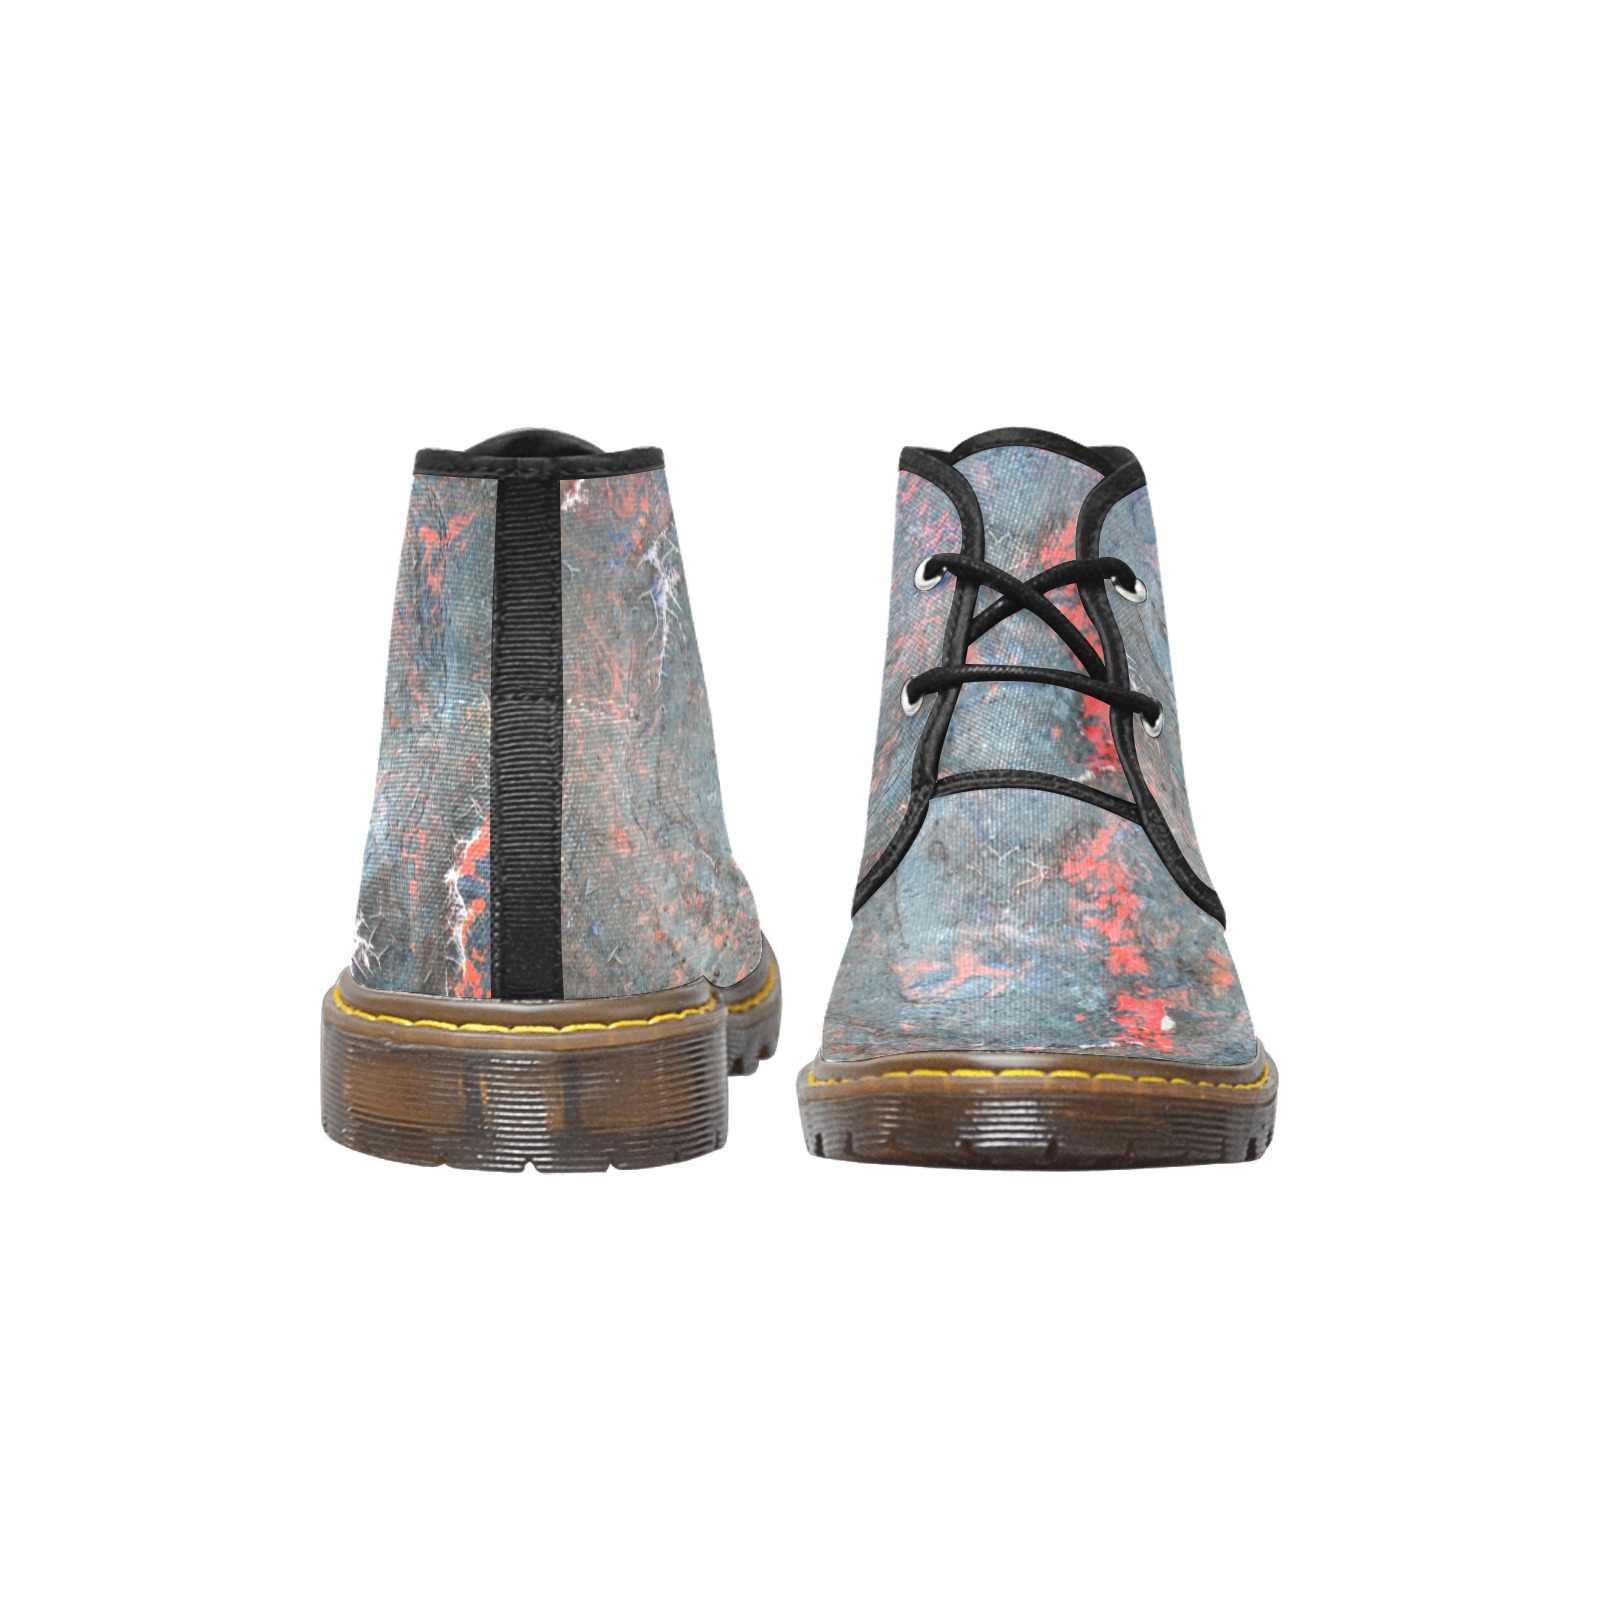 volcanic lava Men's Canvas Chukka Boots (Model 2402-1)